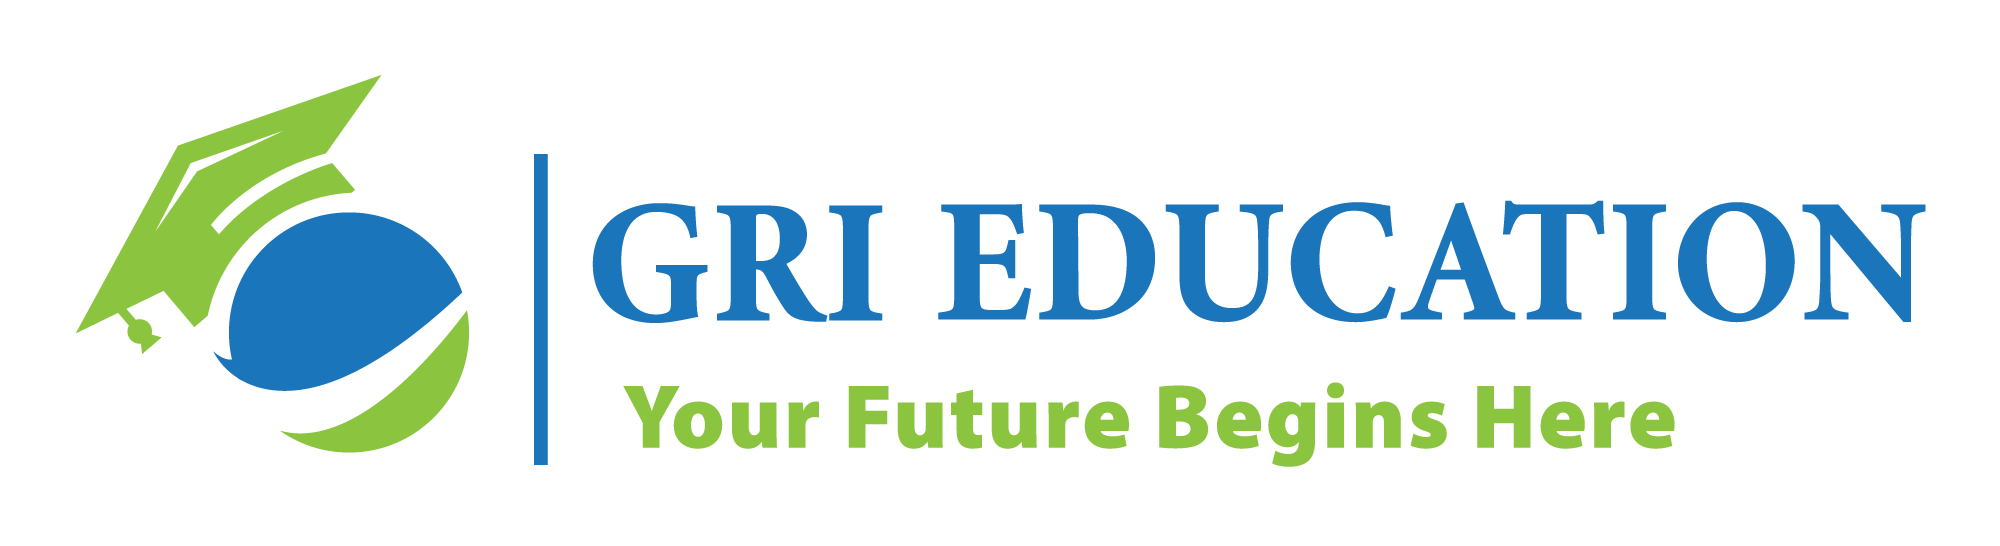 Final-GRI-Education-logo